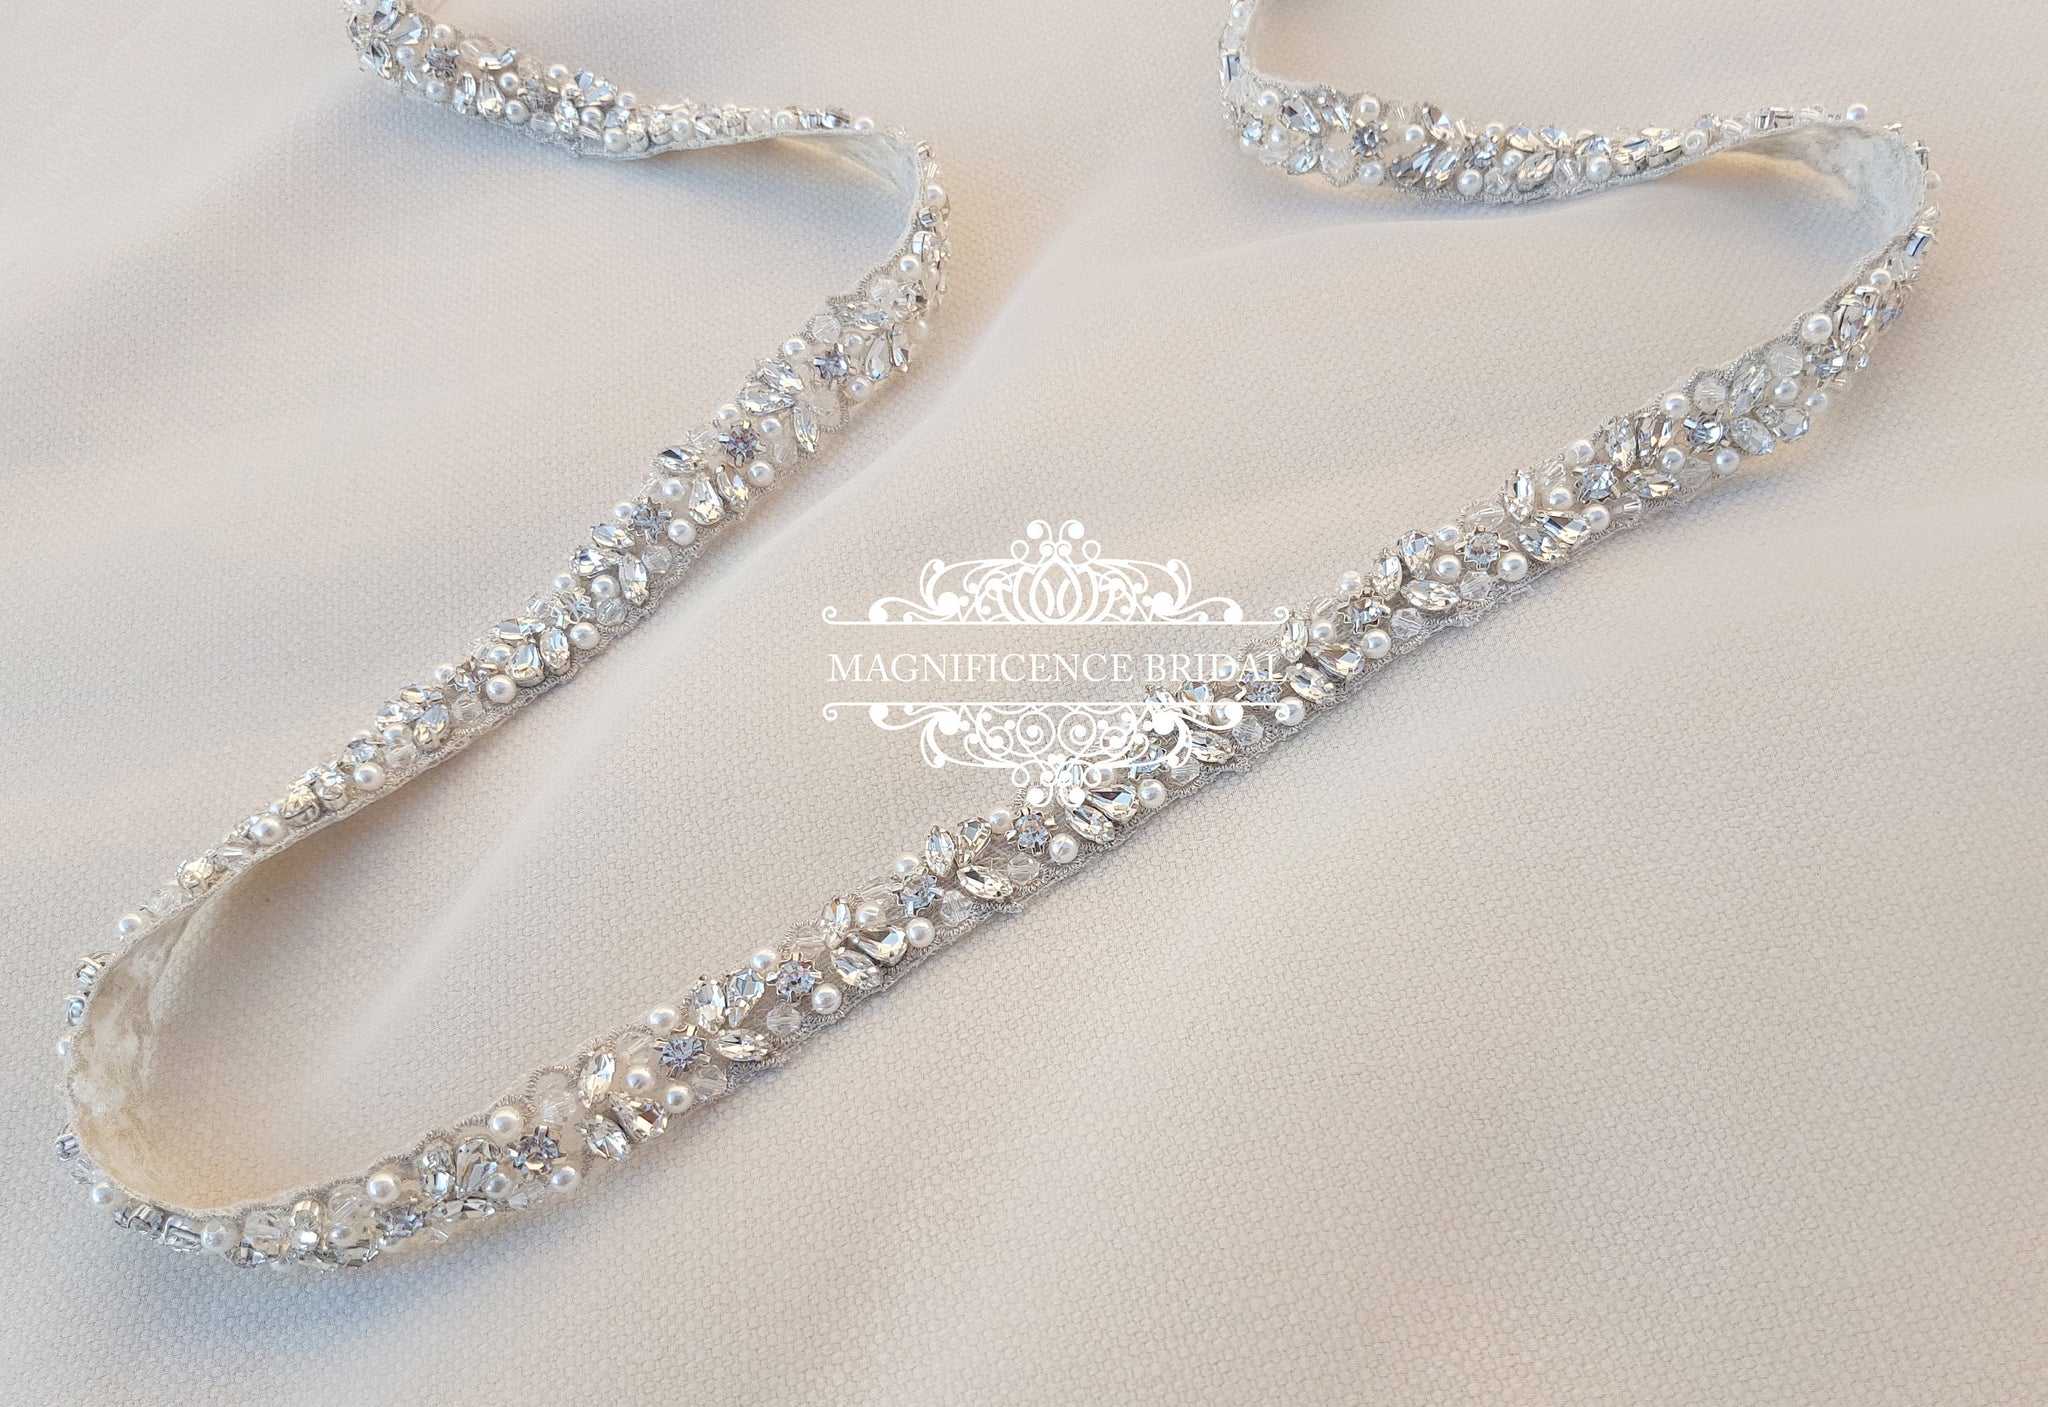 Pearl Bridal Belt, Pearl Sash, Sparkly Belt, Wedding Dress Belt, Pearl  Wedding Belt 1.5 Inches Wide ALICE 